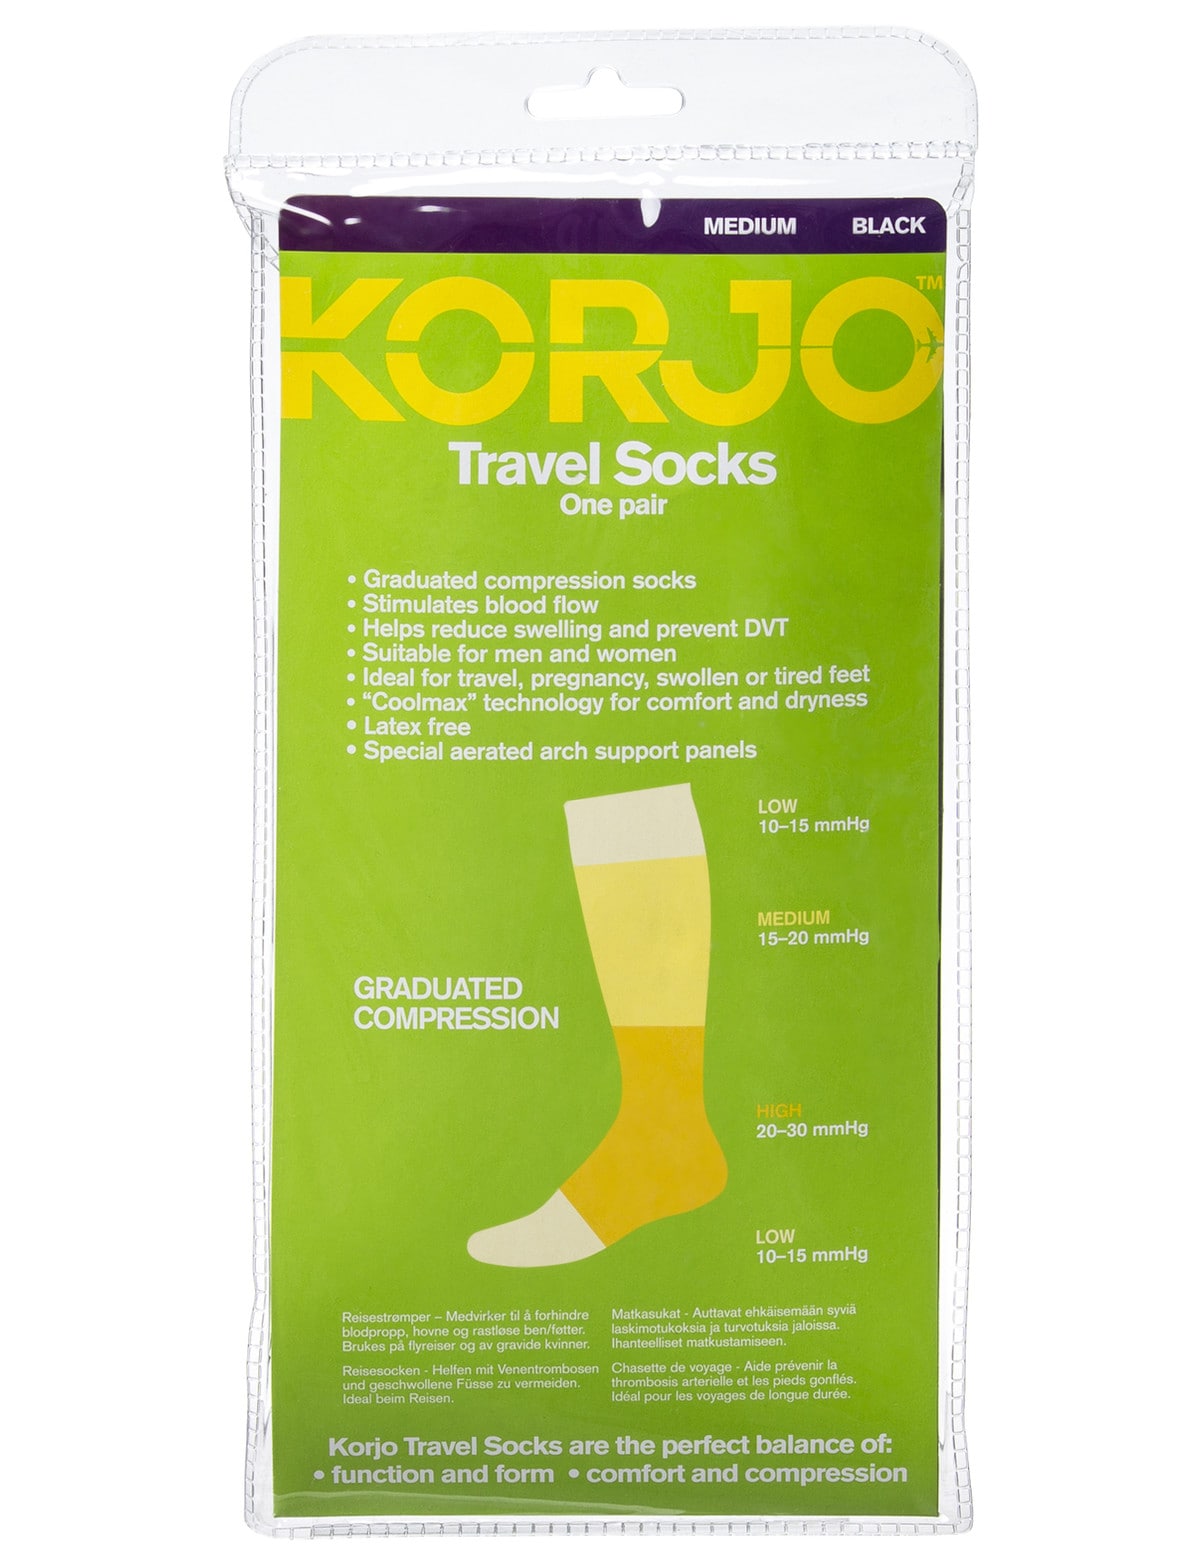 Korjo Travel Socks, Medium - Travel Accessories